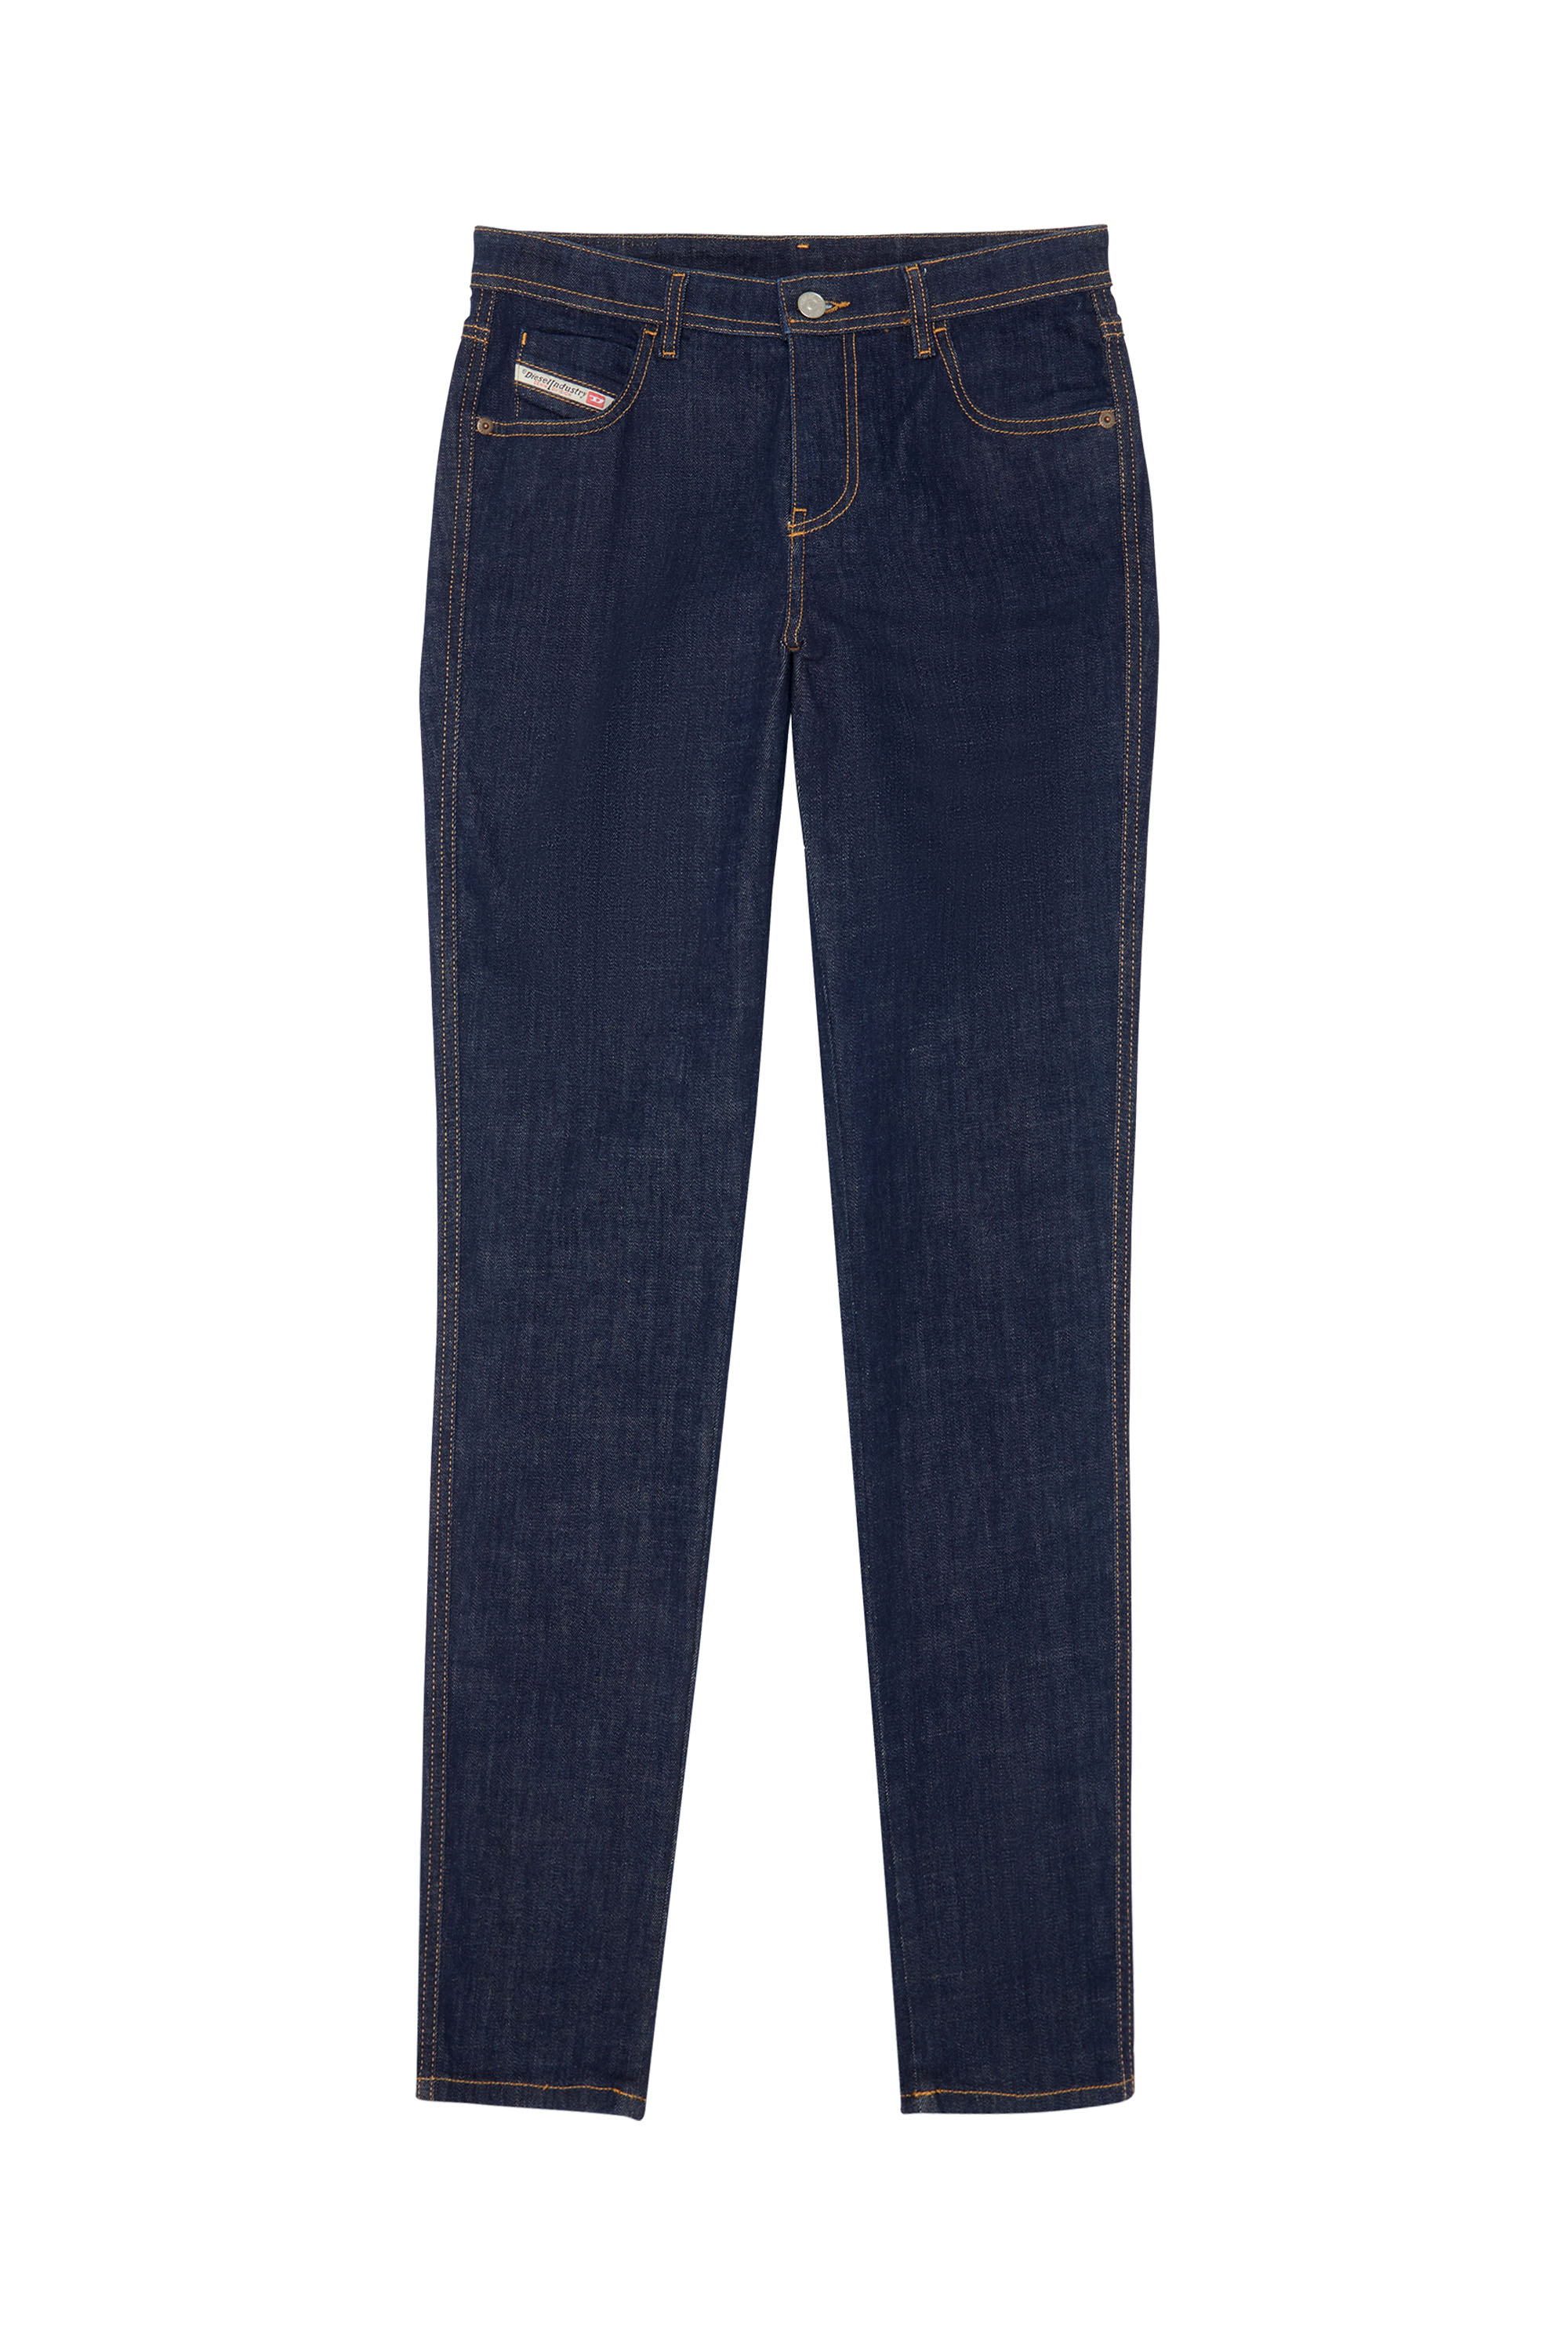 Skinny Jeans 2015 Babhila Z9C17, Dunkelblau - Jeans